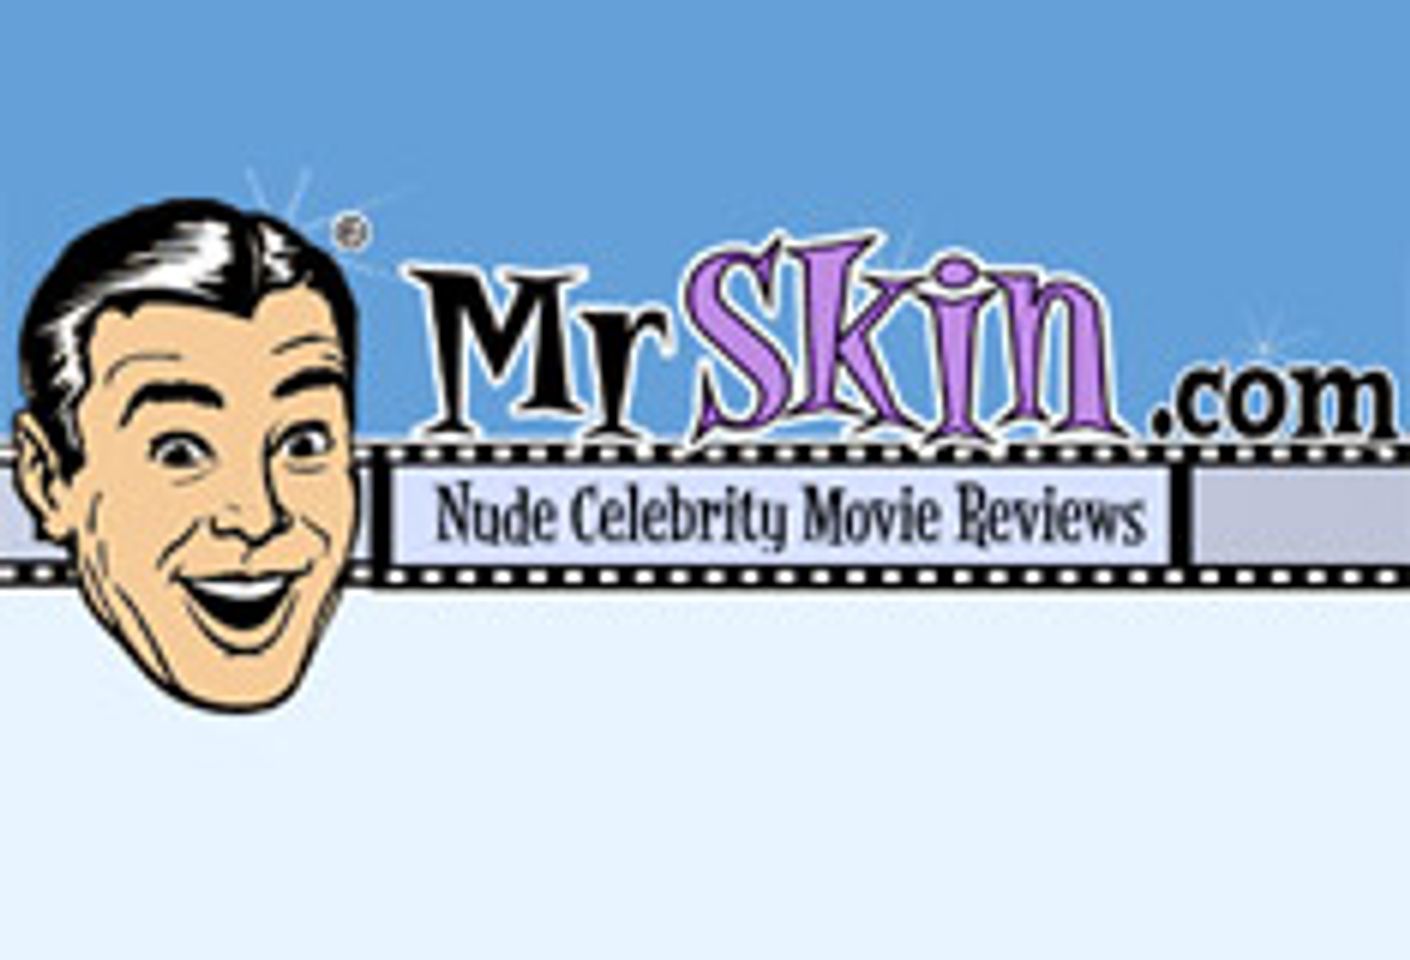 MrSkin.com Converts to Windows Media Viewer, Ditches RealPlayer